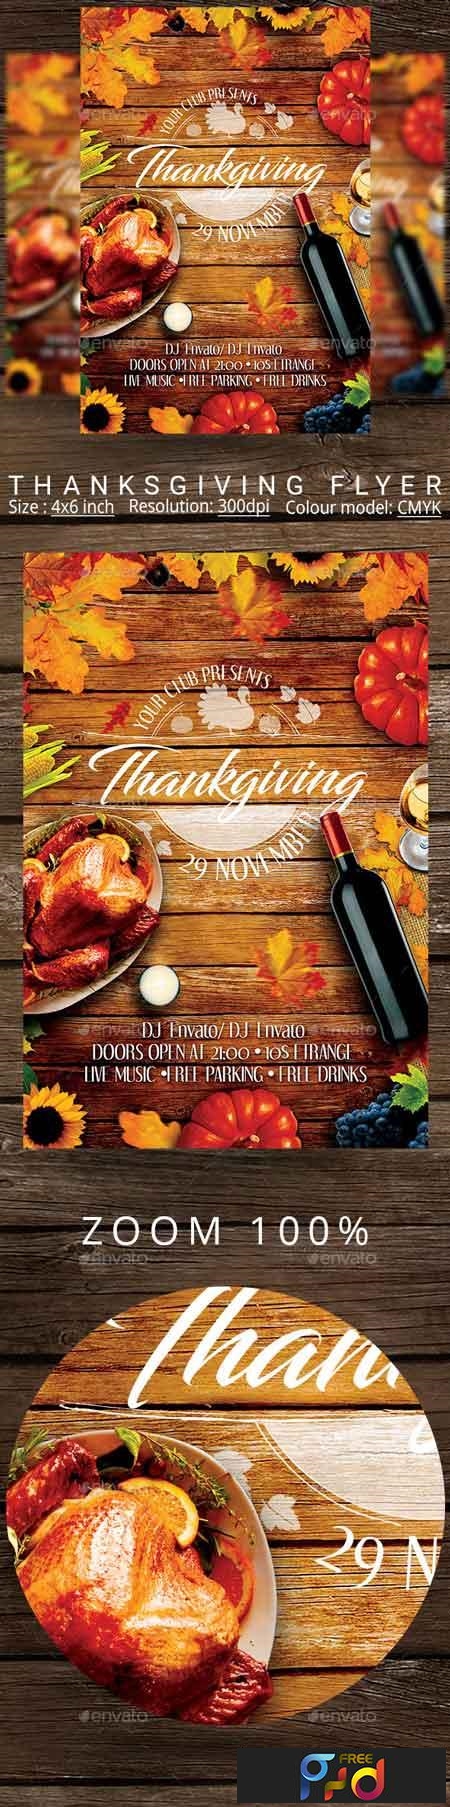 FreePsdVn.com 1813297 TEMPLATE thanksgiving dinner flyer 22650983